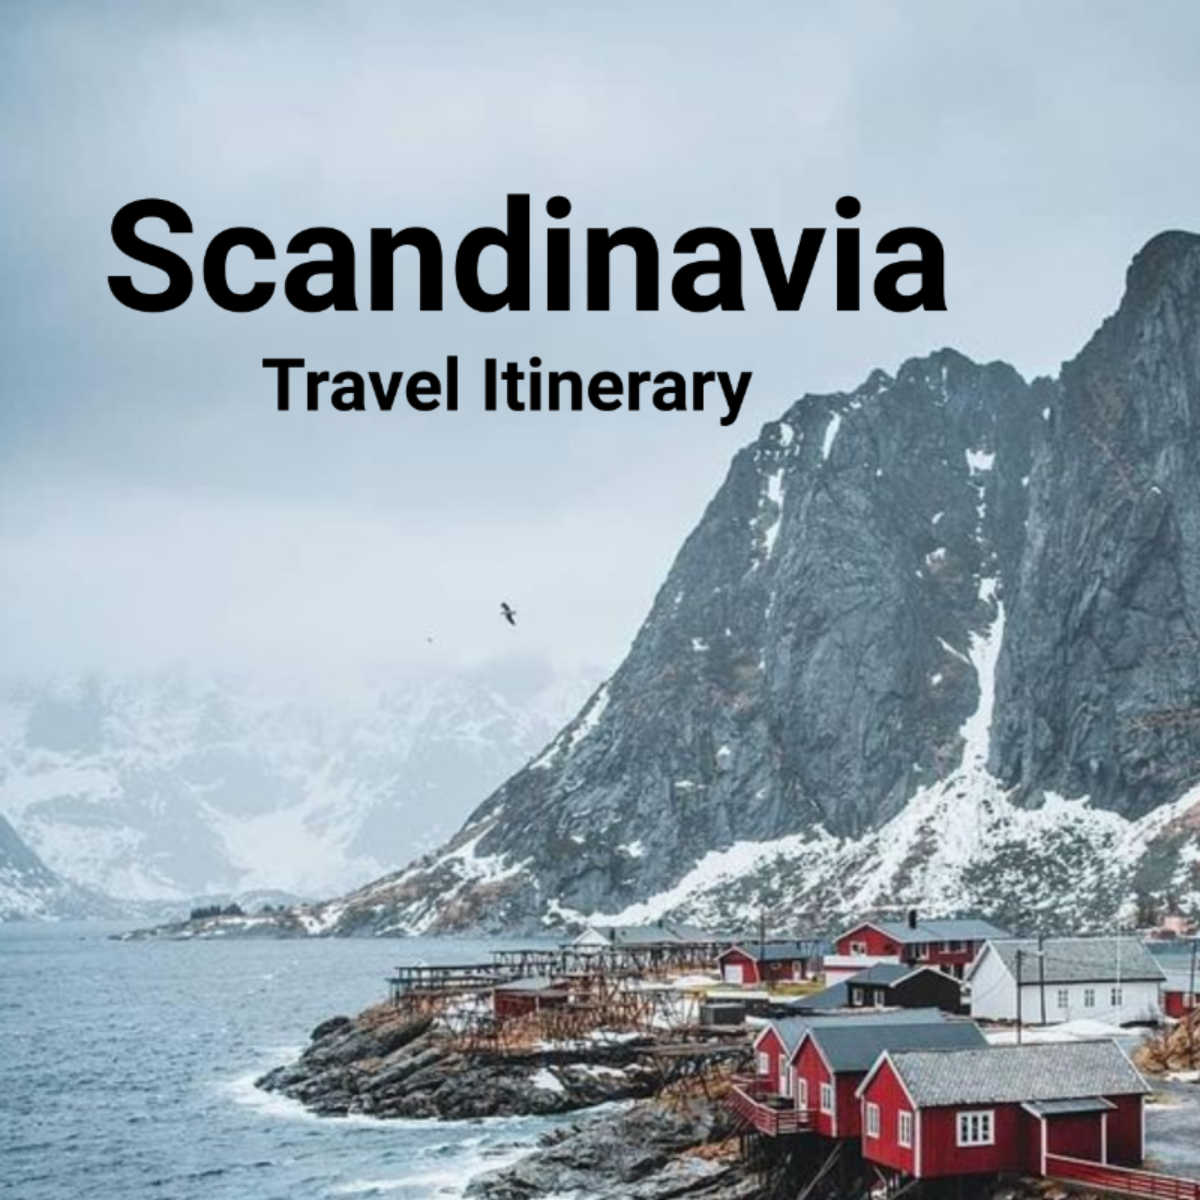 Free Scandinavia Travel Itinerary Template